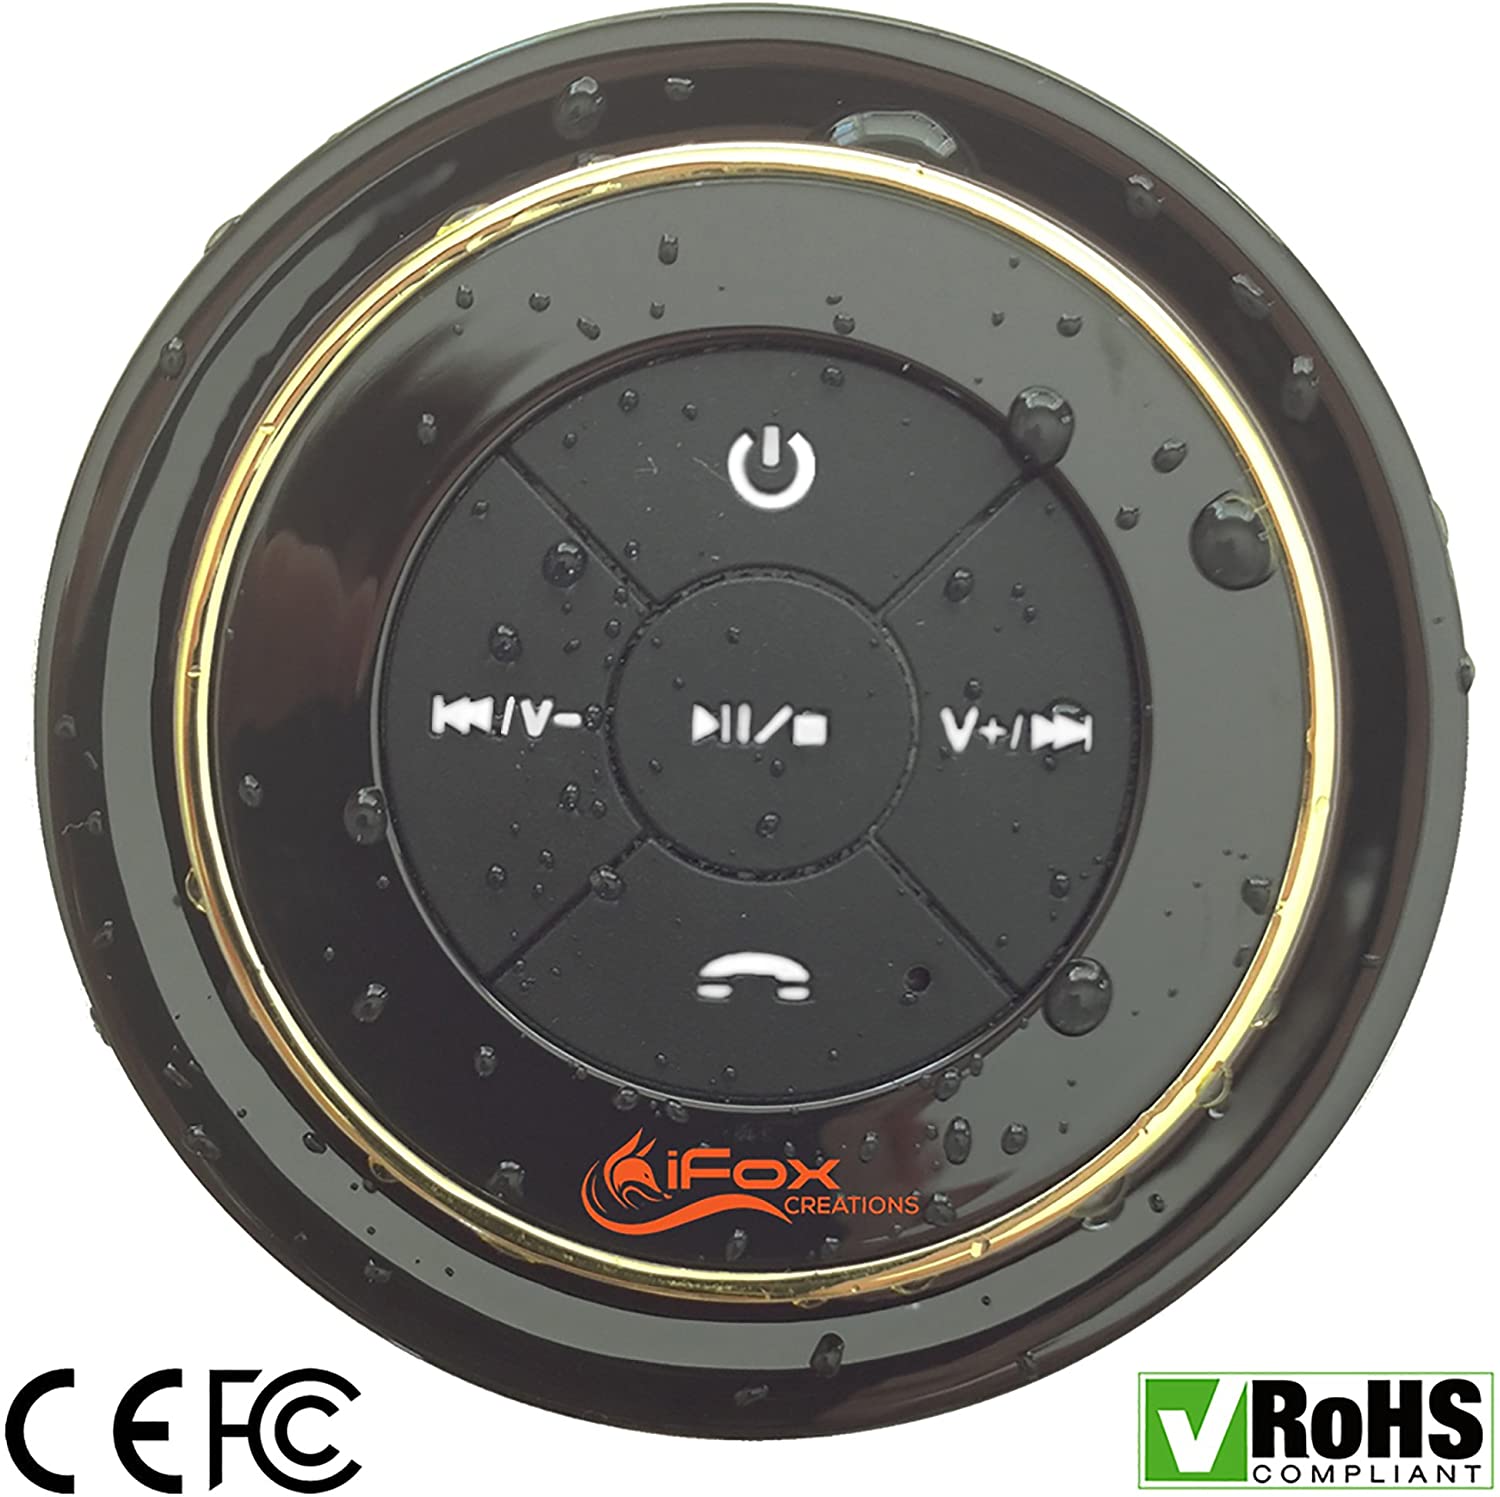 LIGHTNING DEAL!!! iFox iF012 Bluetooth Shower Speaker – Certified Waterproof $25.49 (REG $54.99)